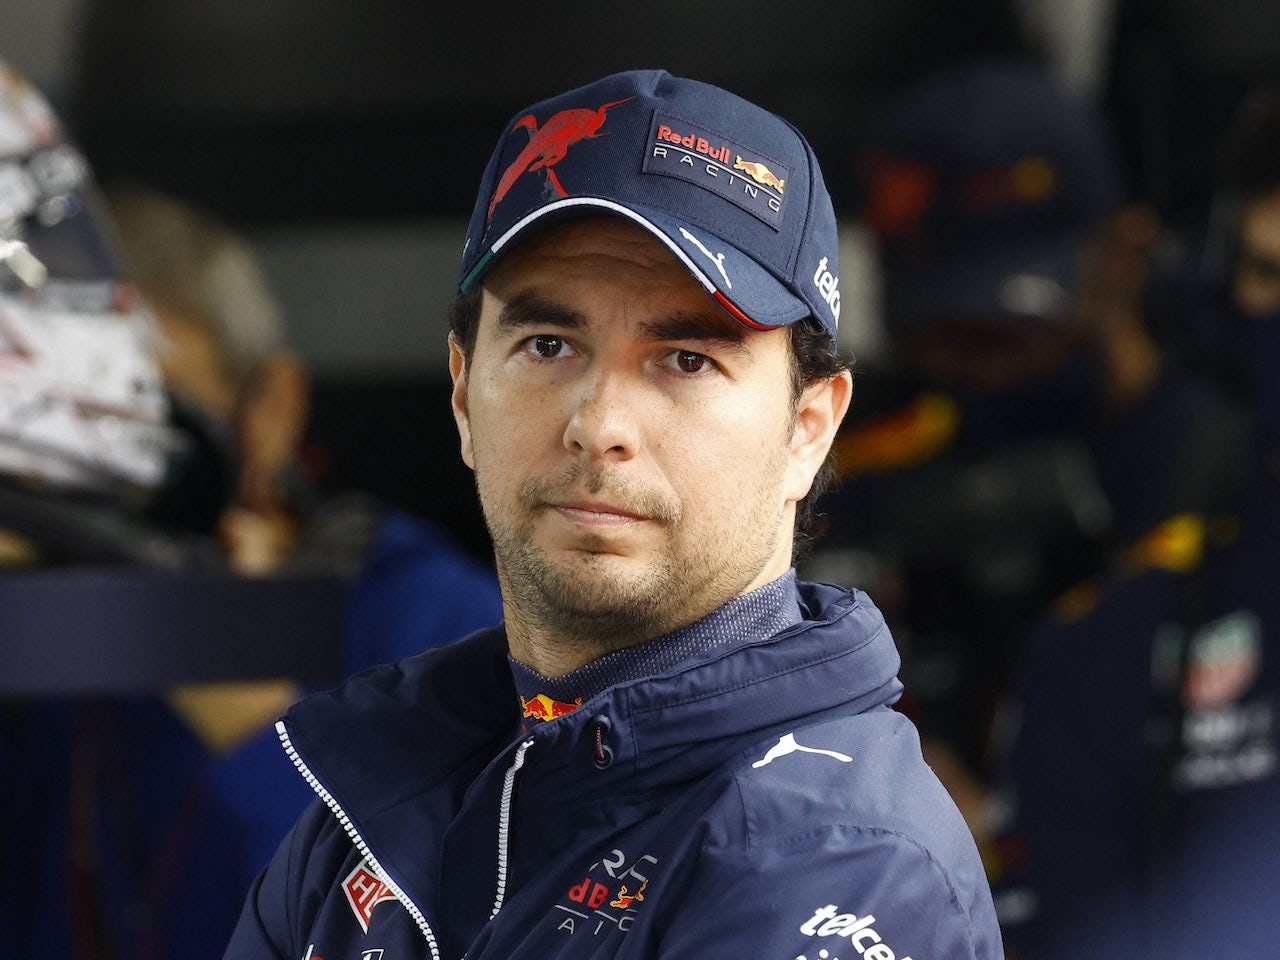 F1 media harsher on 'lazy Latino' drivers - Perez